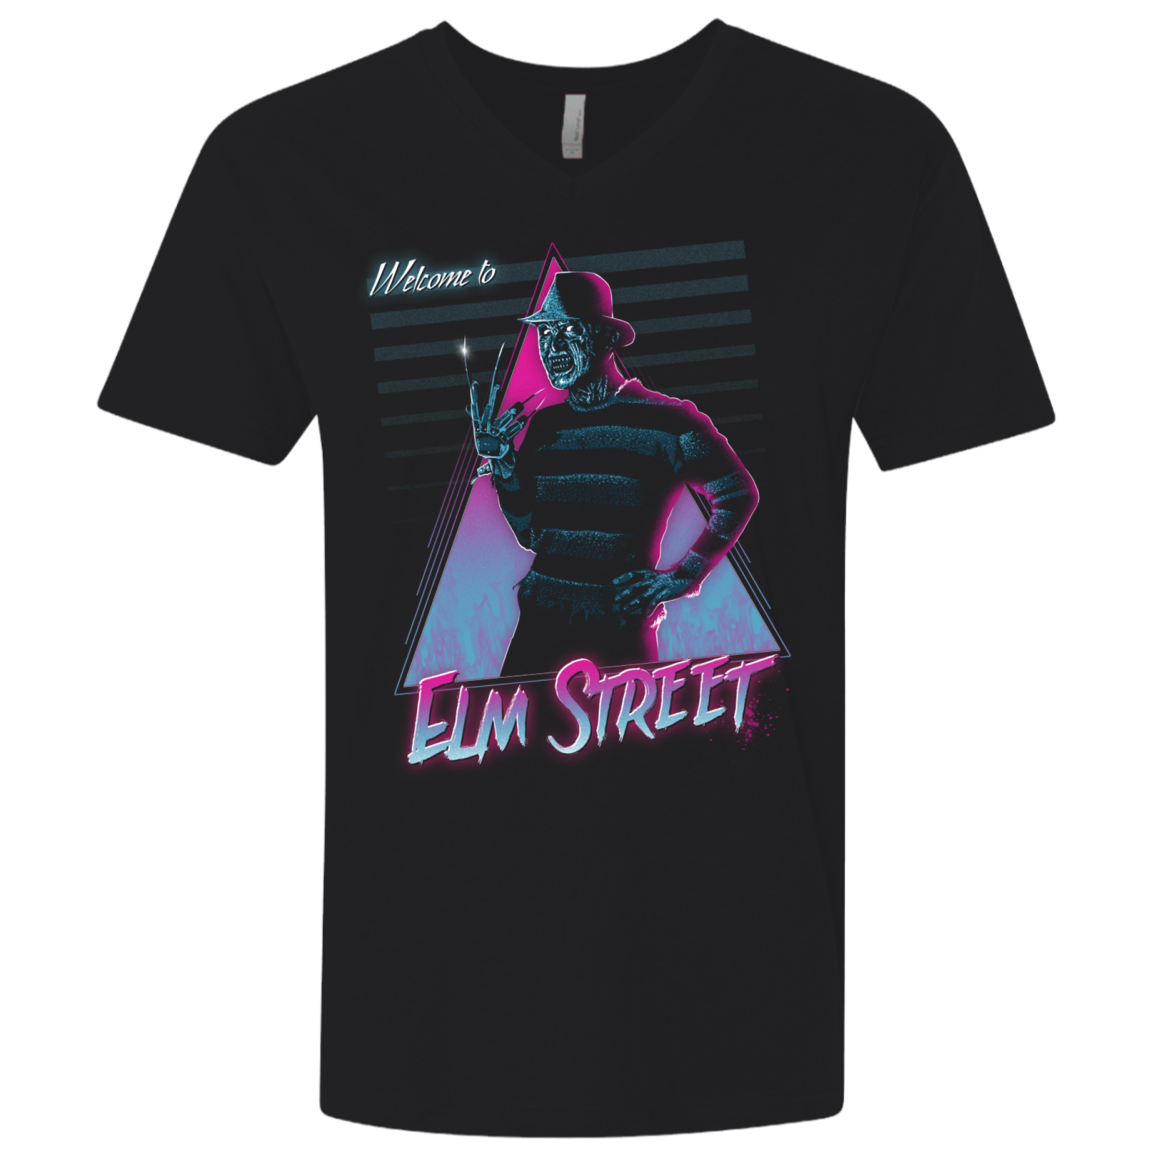 Welcome to Elm Street Men's Premium V-Neck